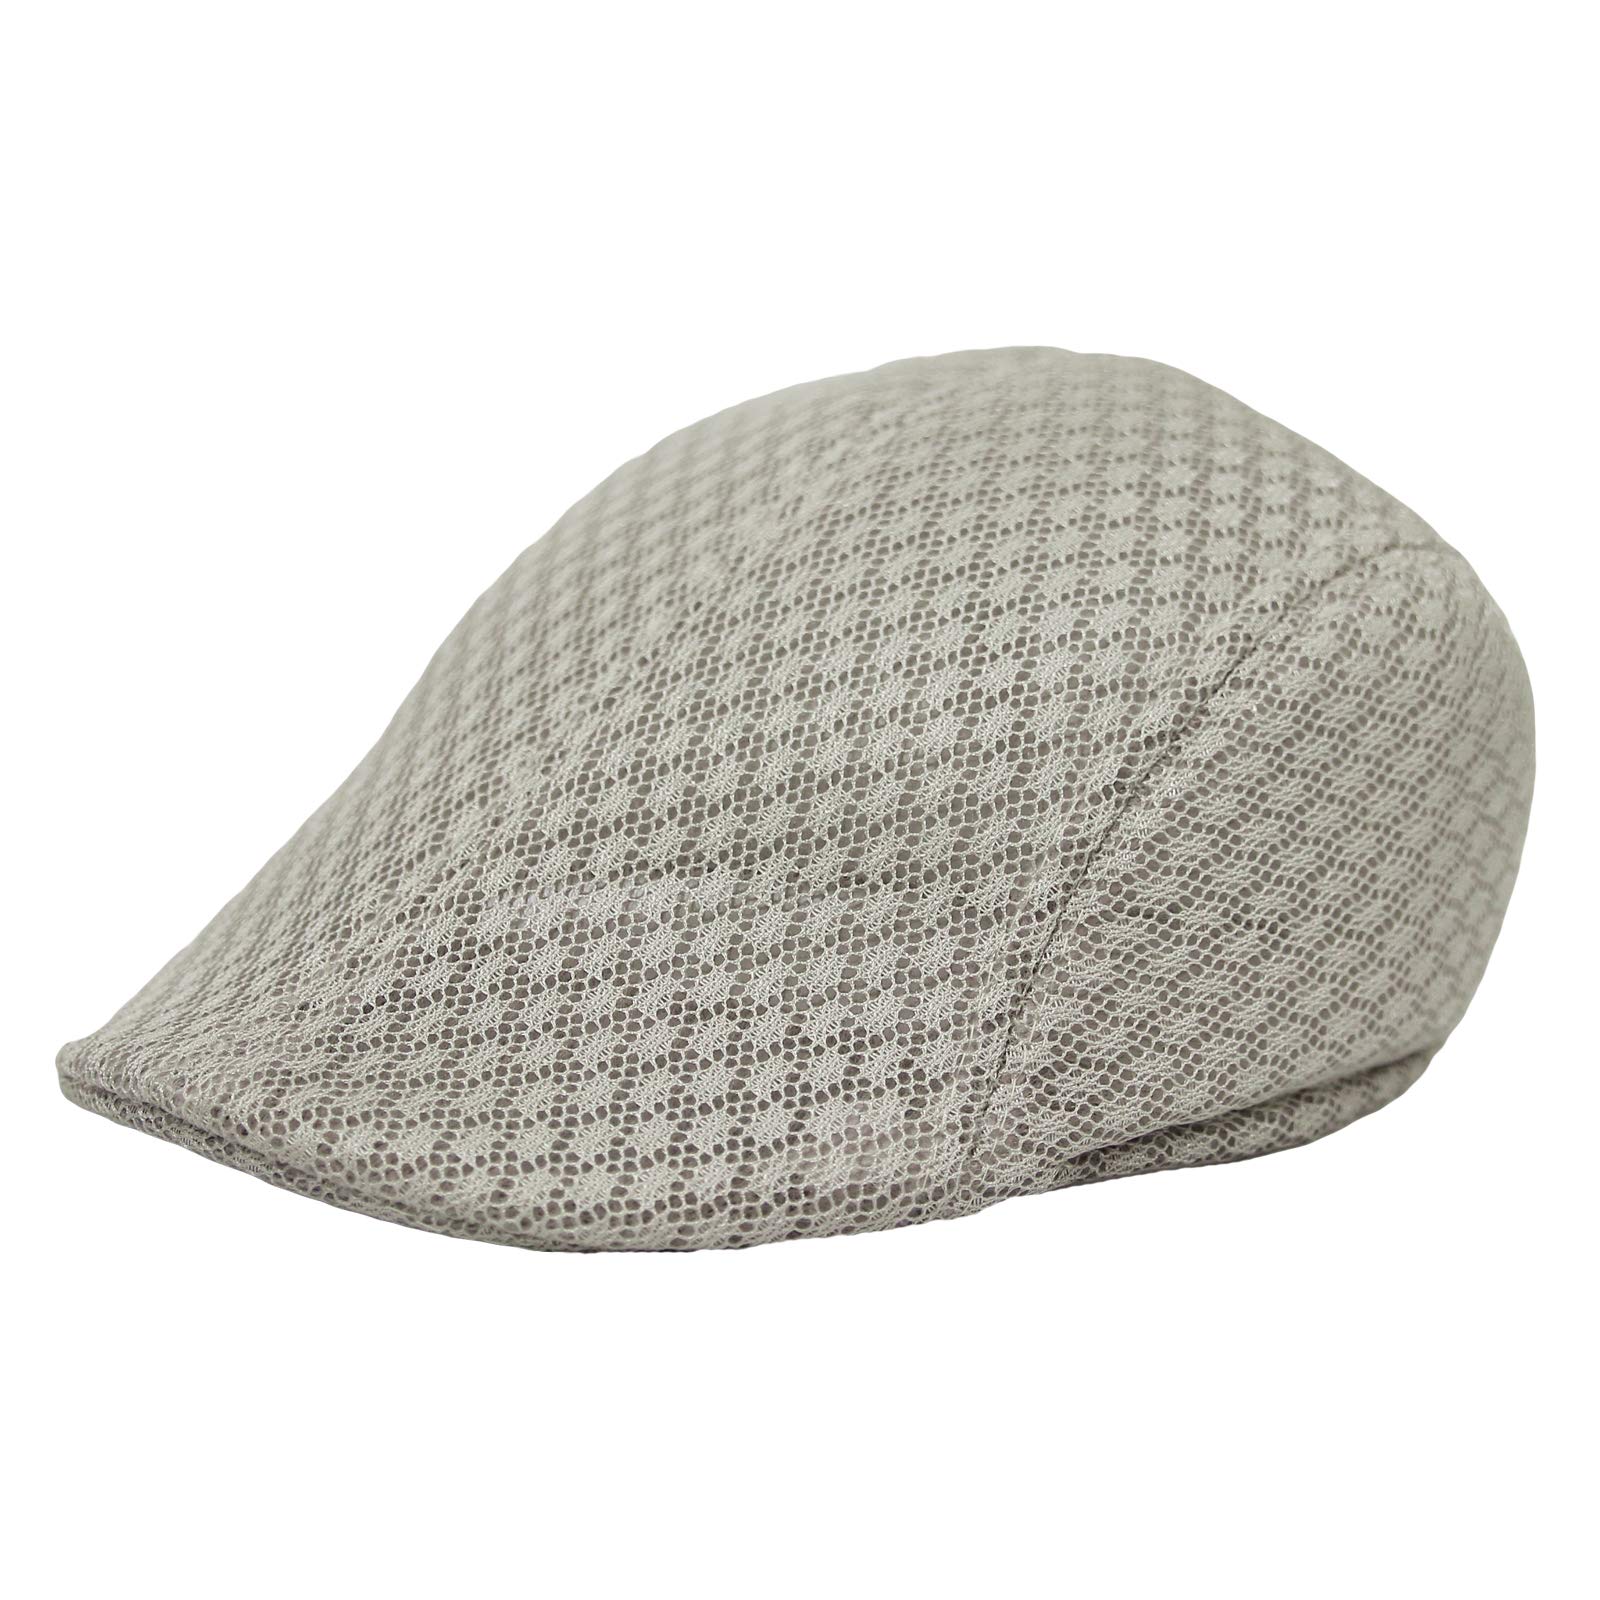 WITHMOONS Summer Cool Mesh Hunting Hat for Men Women UZ30053